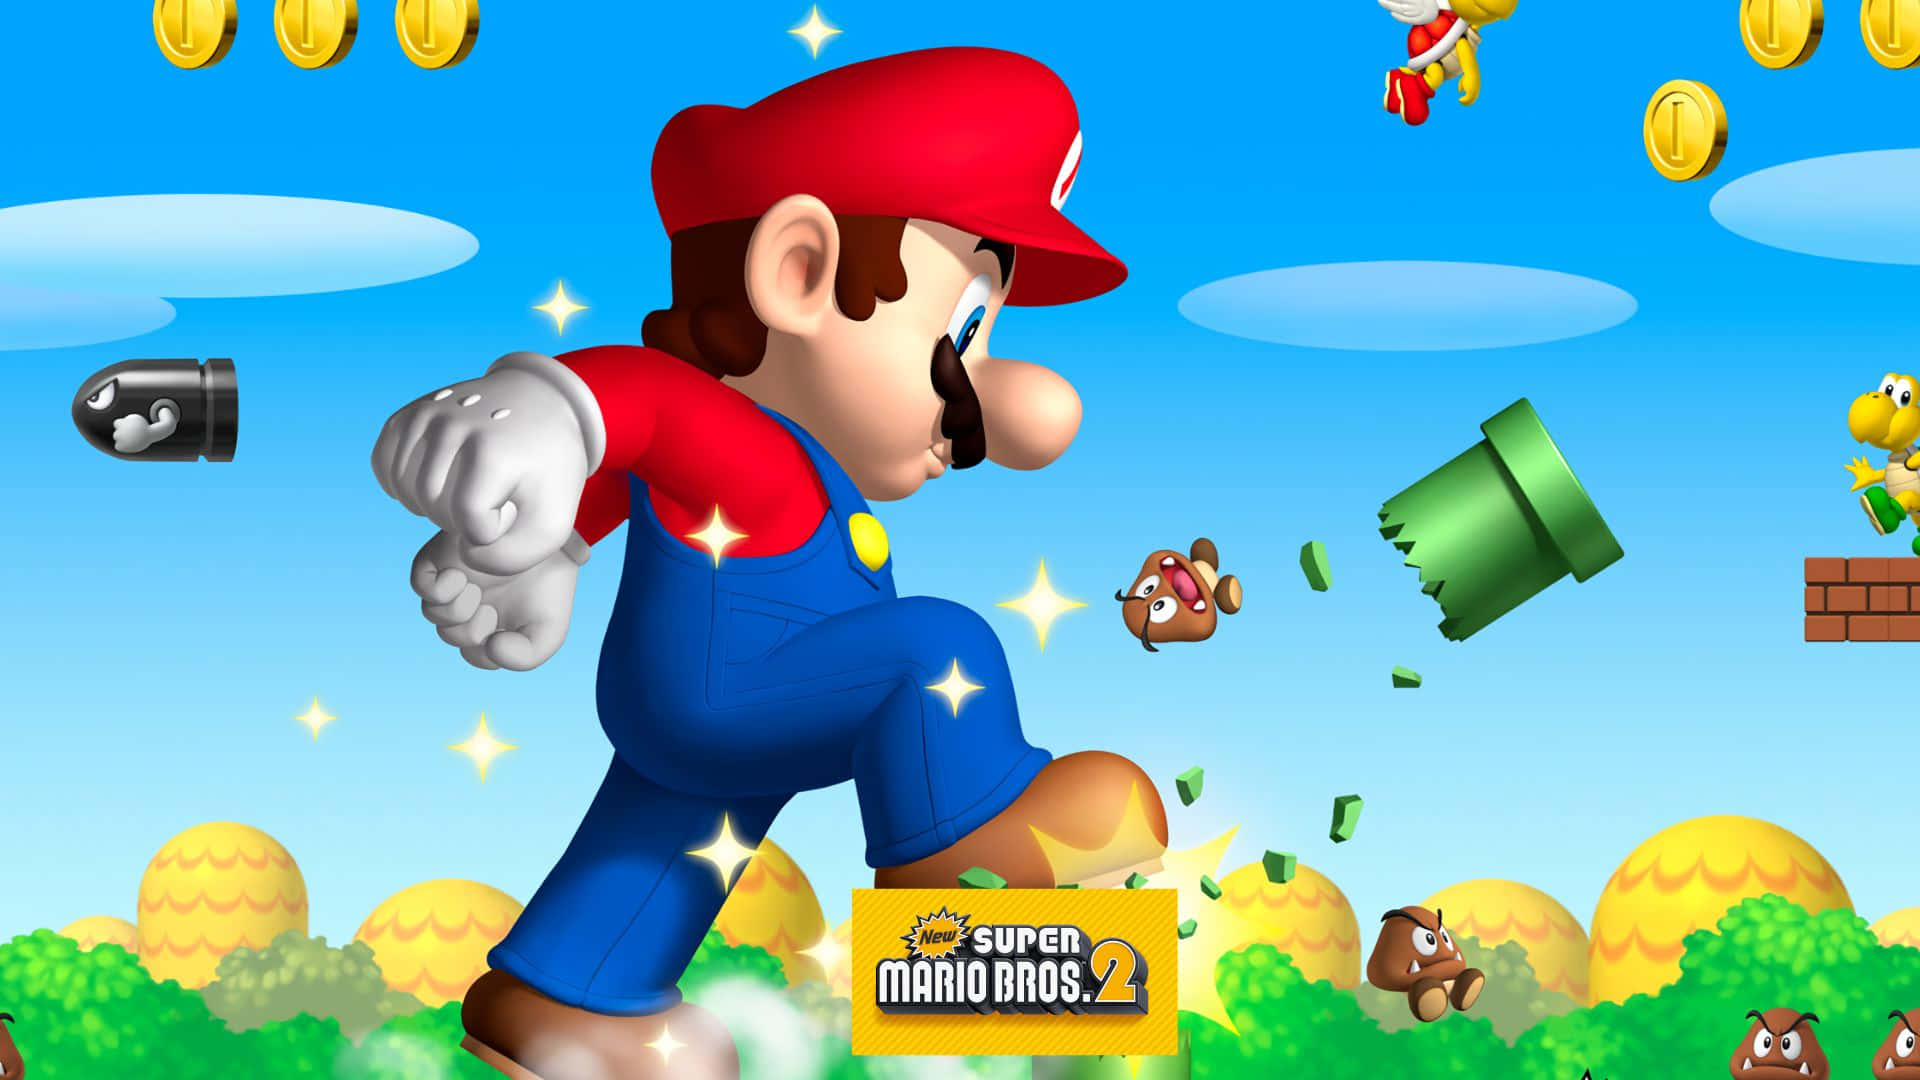 Super Mario Bros 2 characters in action Wallpaper